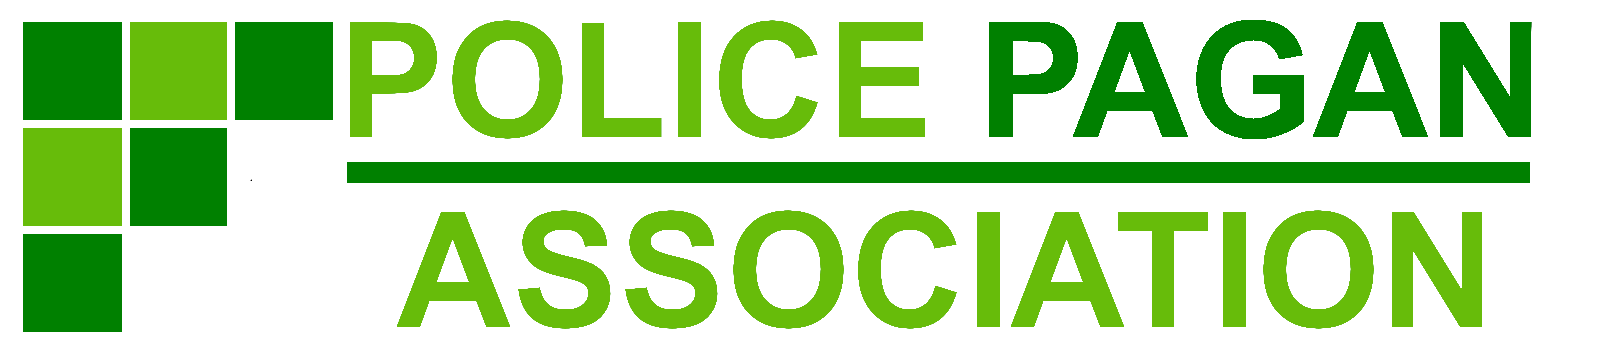 Police Pagan Association logo